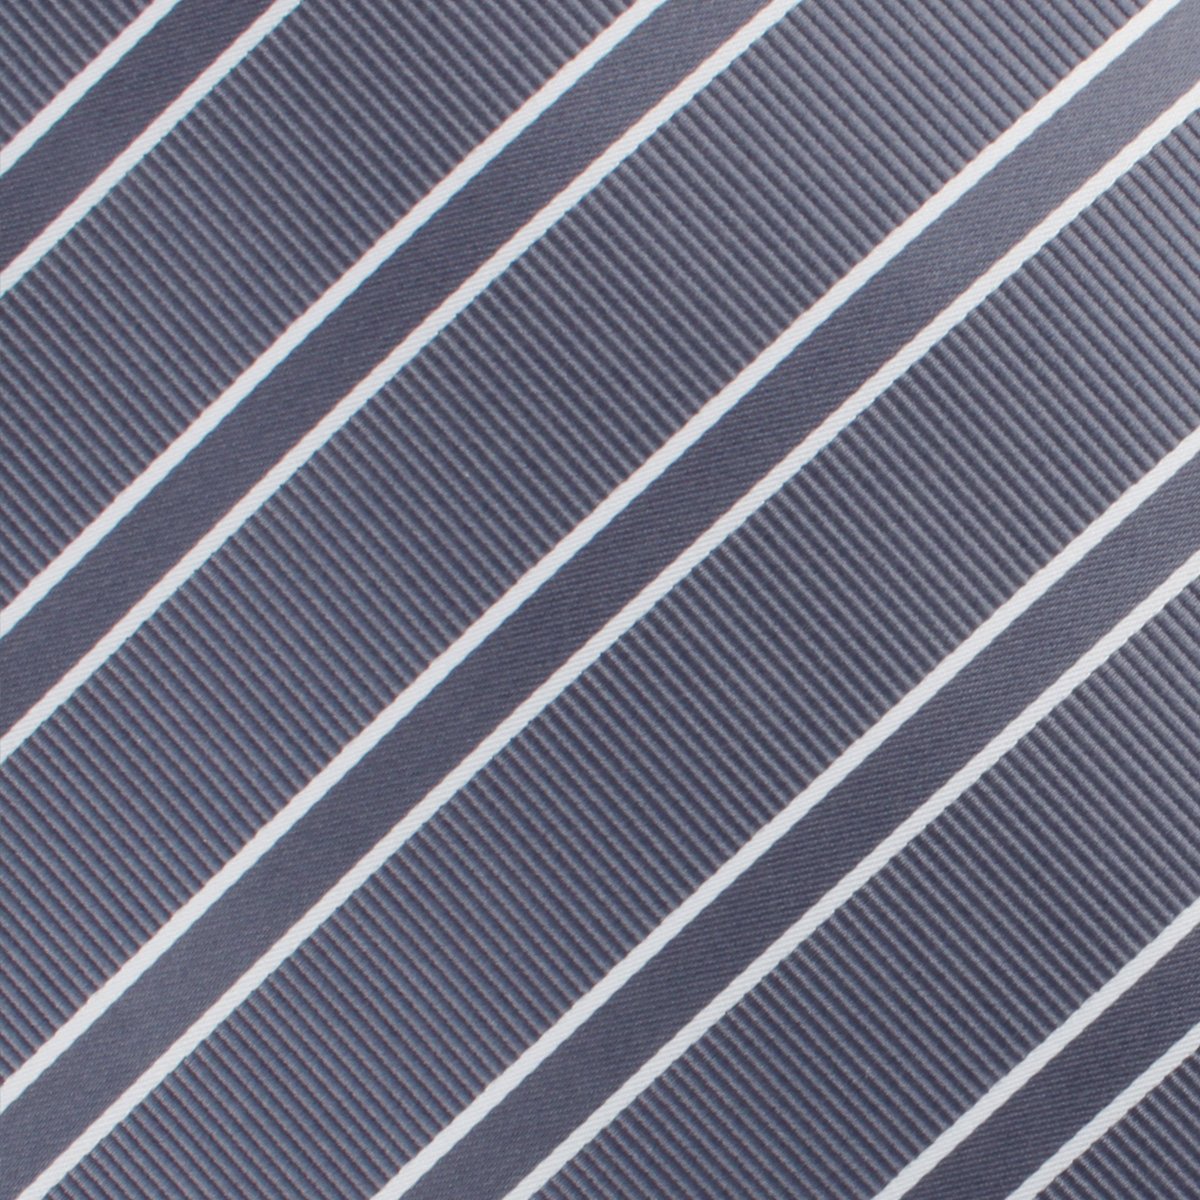 Graphite Charcoal Grey Double Stripe Skinny Tie Fabric